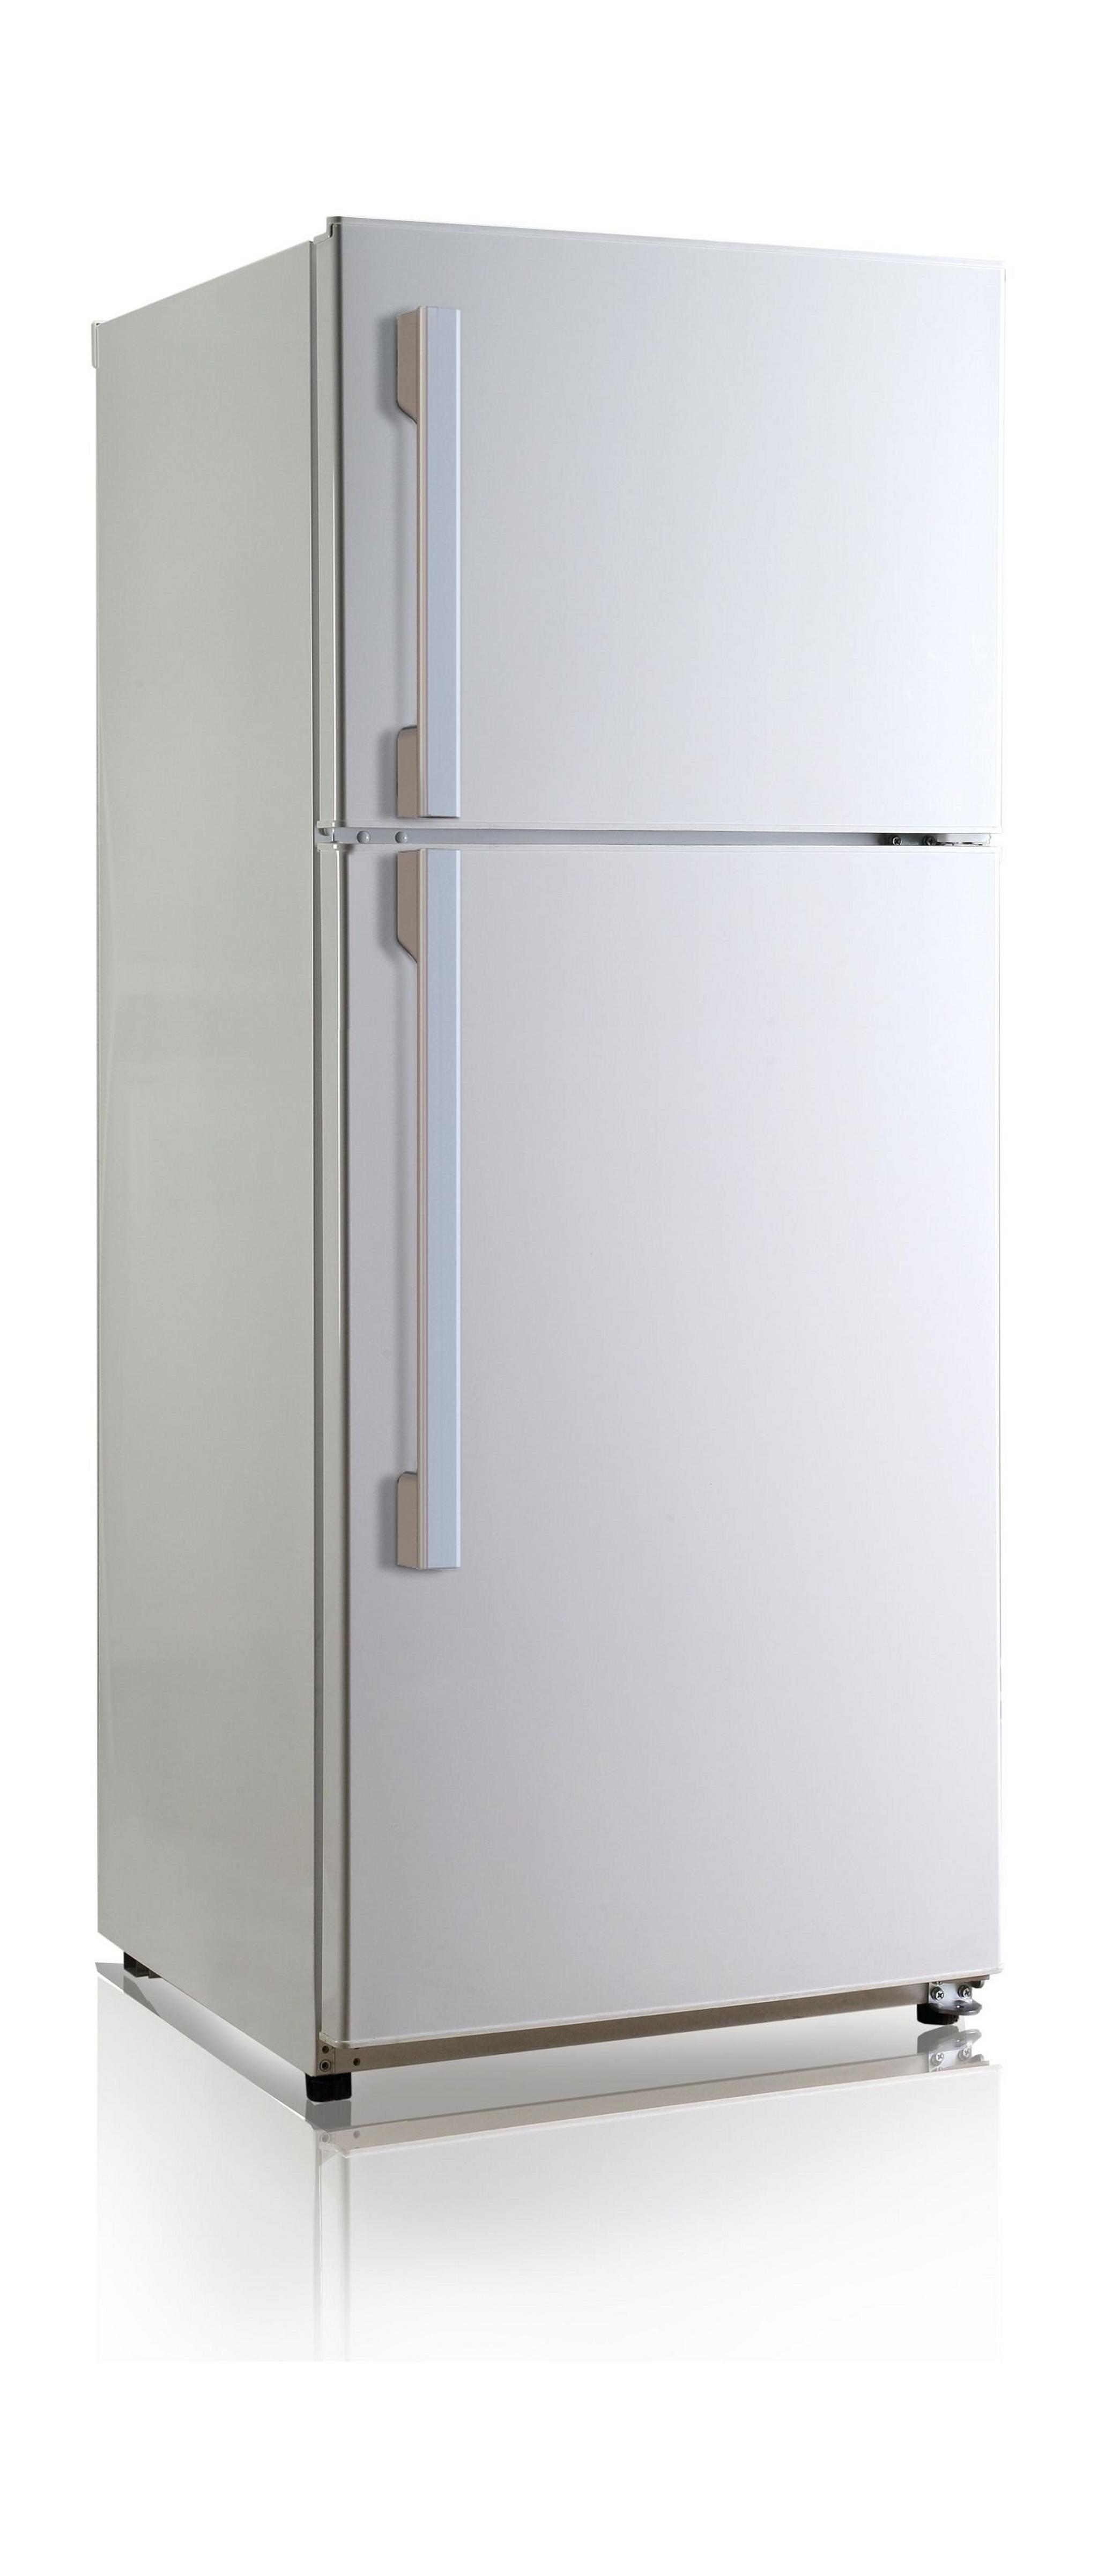 Wansa 18 Cft. Top Mount Refrigerator (520NFWT6) - White